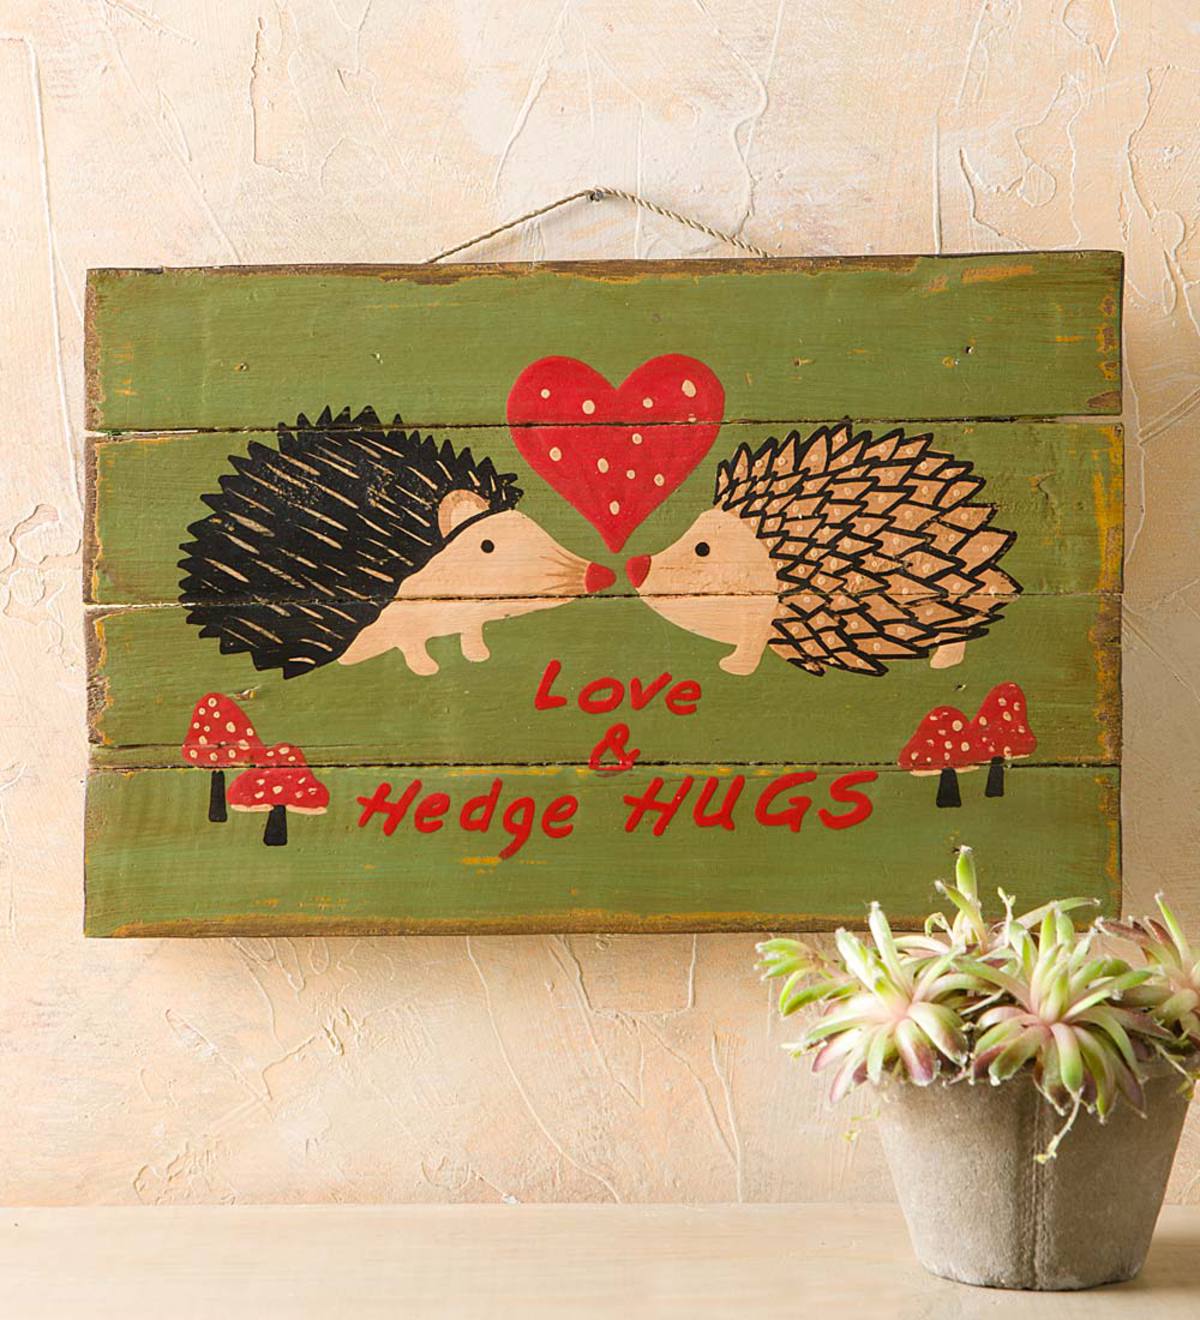 Love & Hedge Hugs Wooden Sign